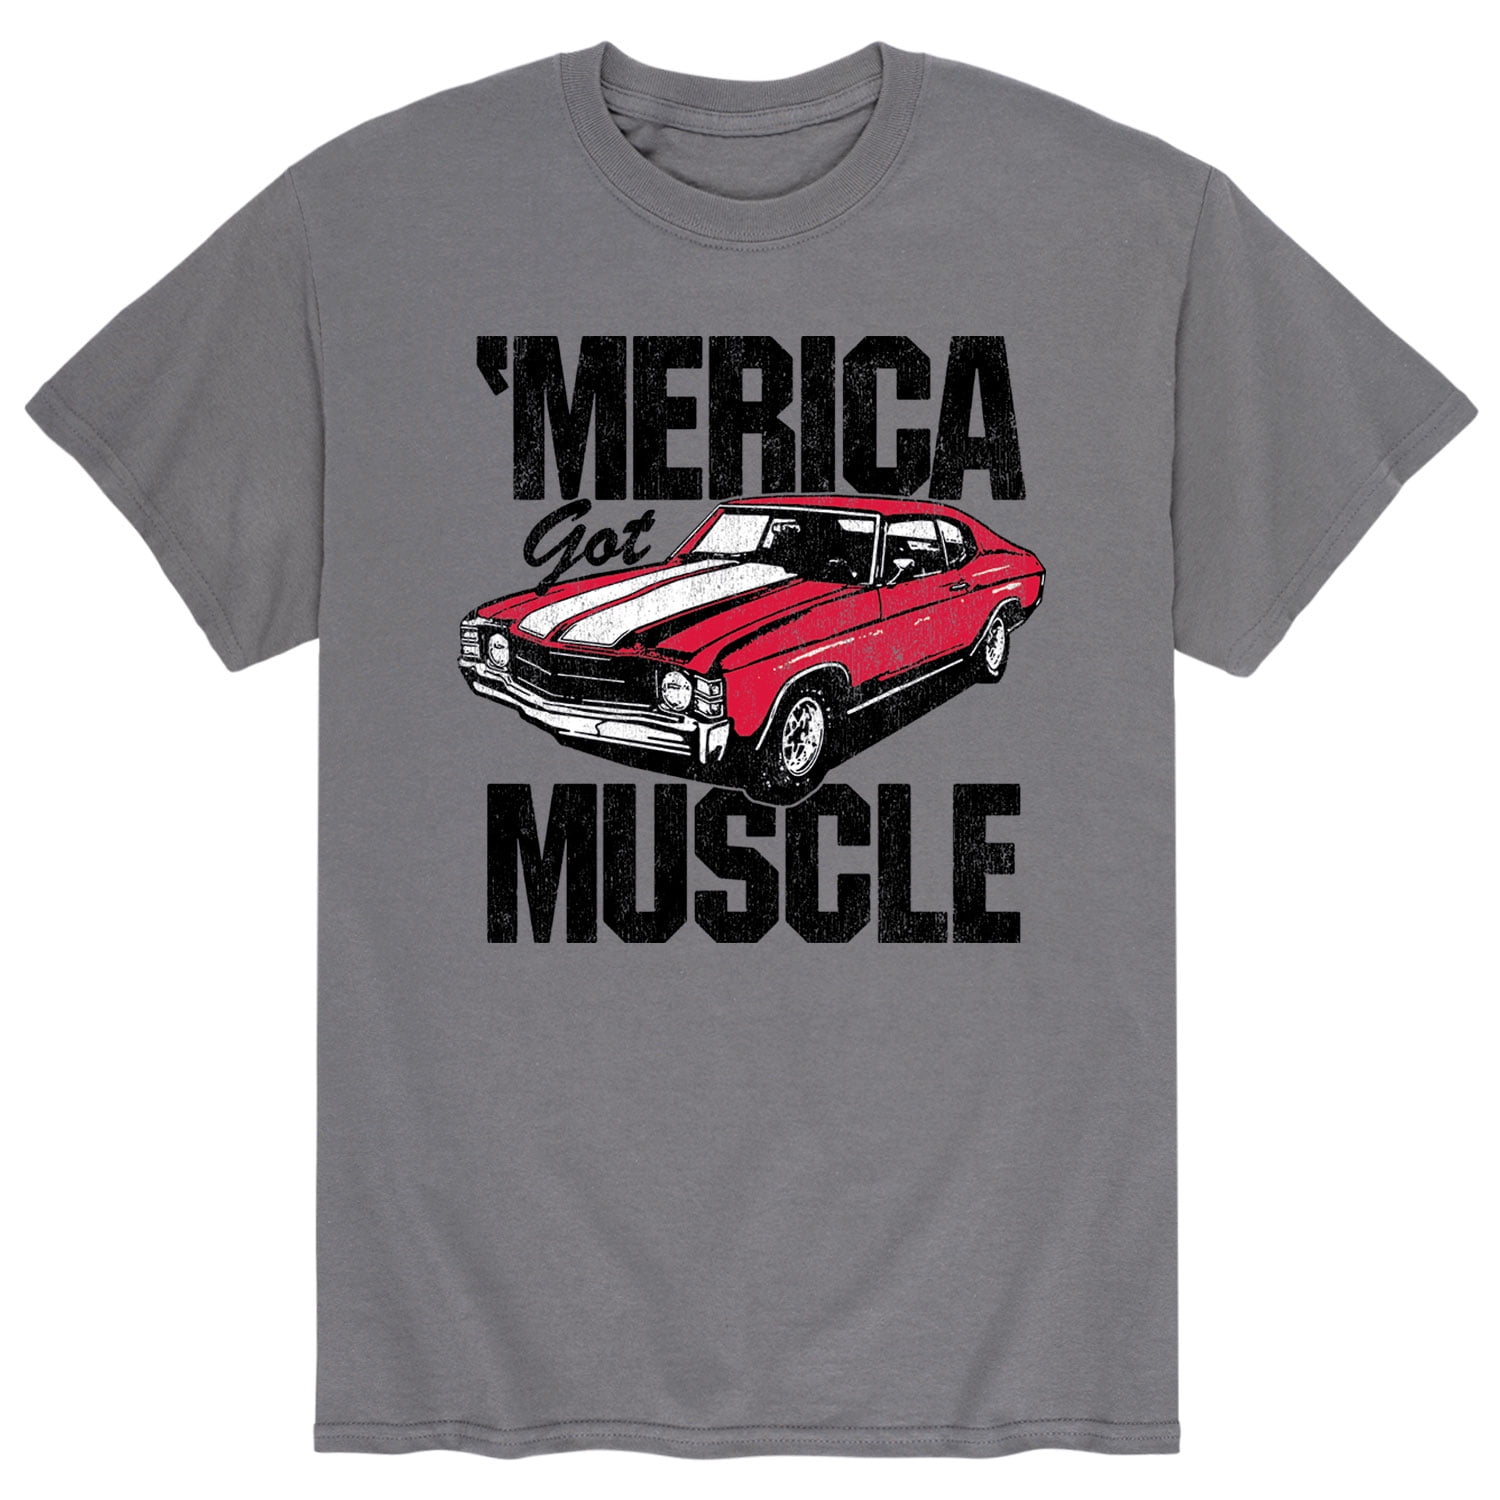 Instant Message - Merica Got Muscle, Car - Men's Short Sleeve Graphic T ...